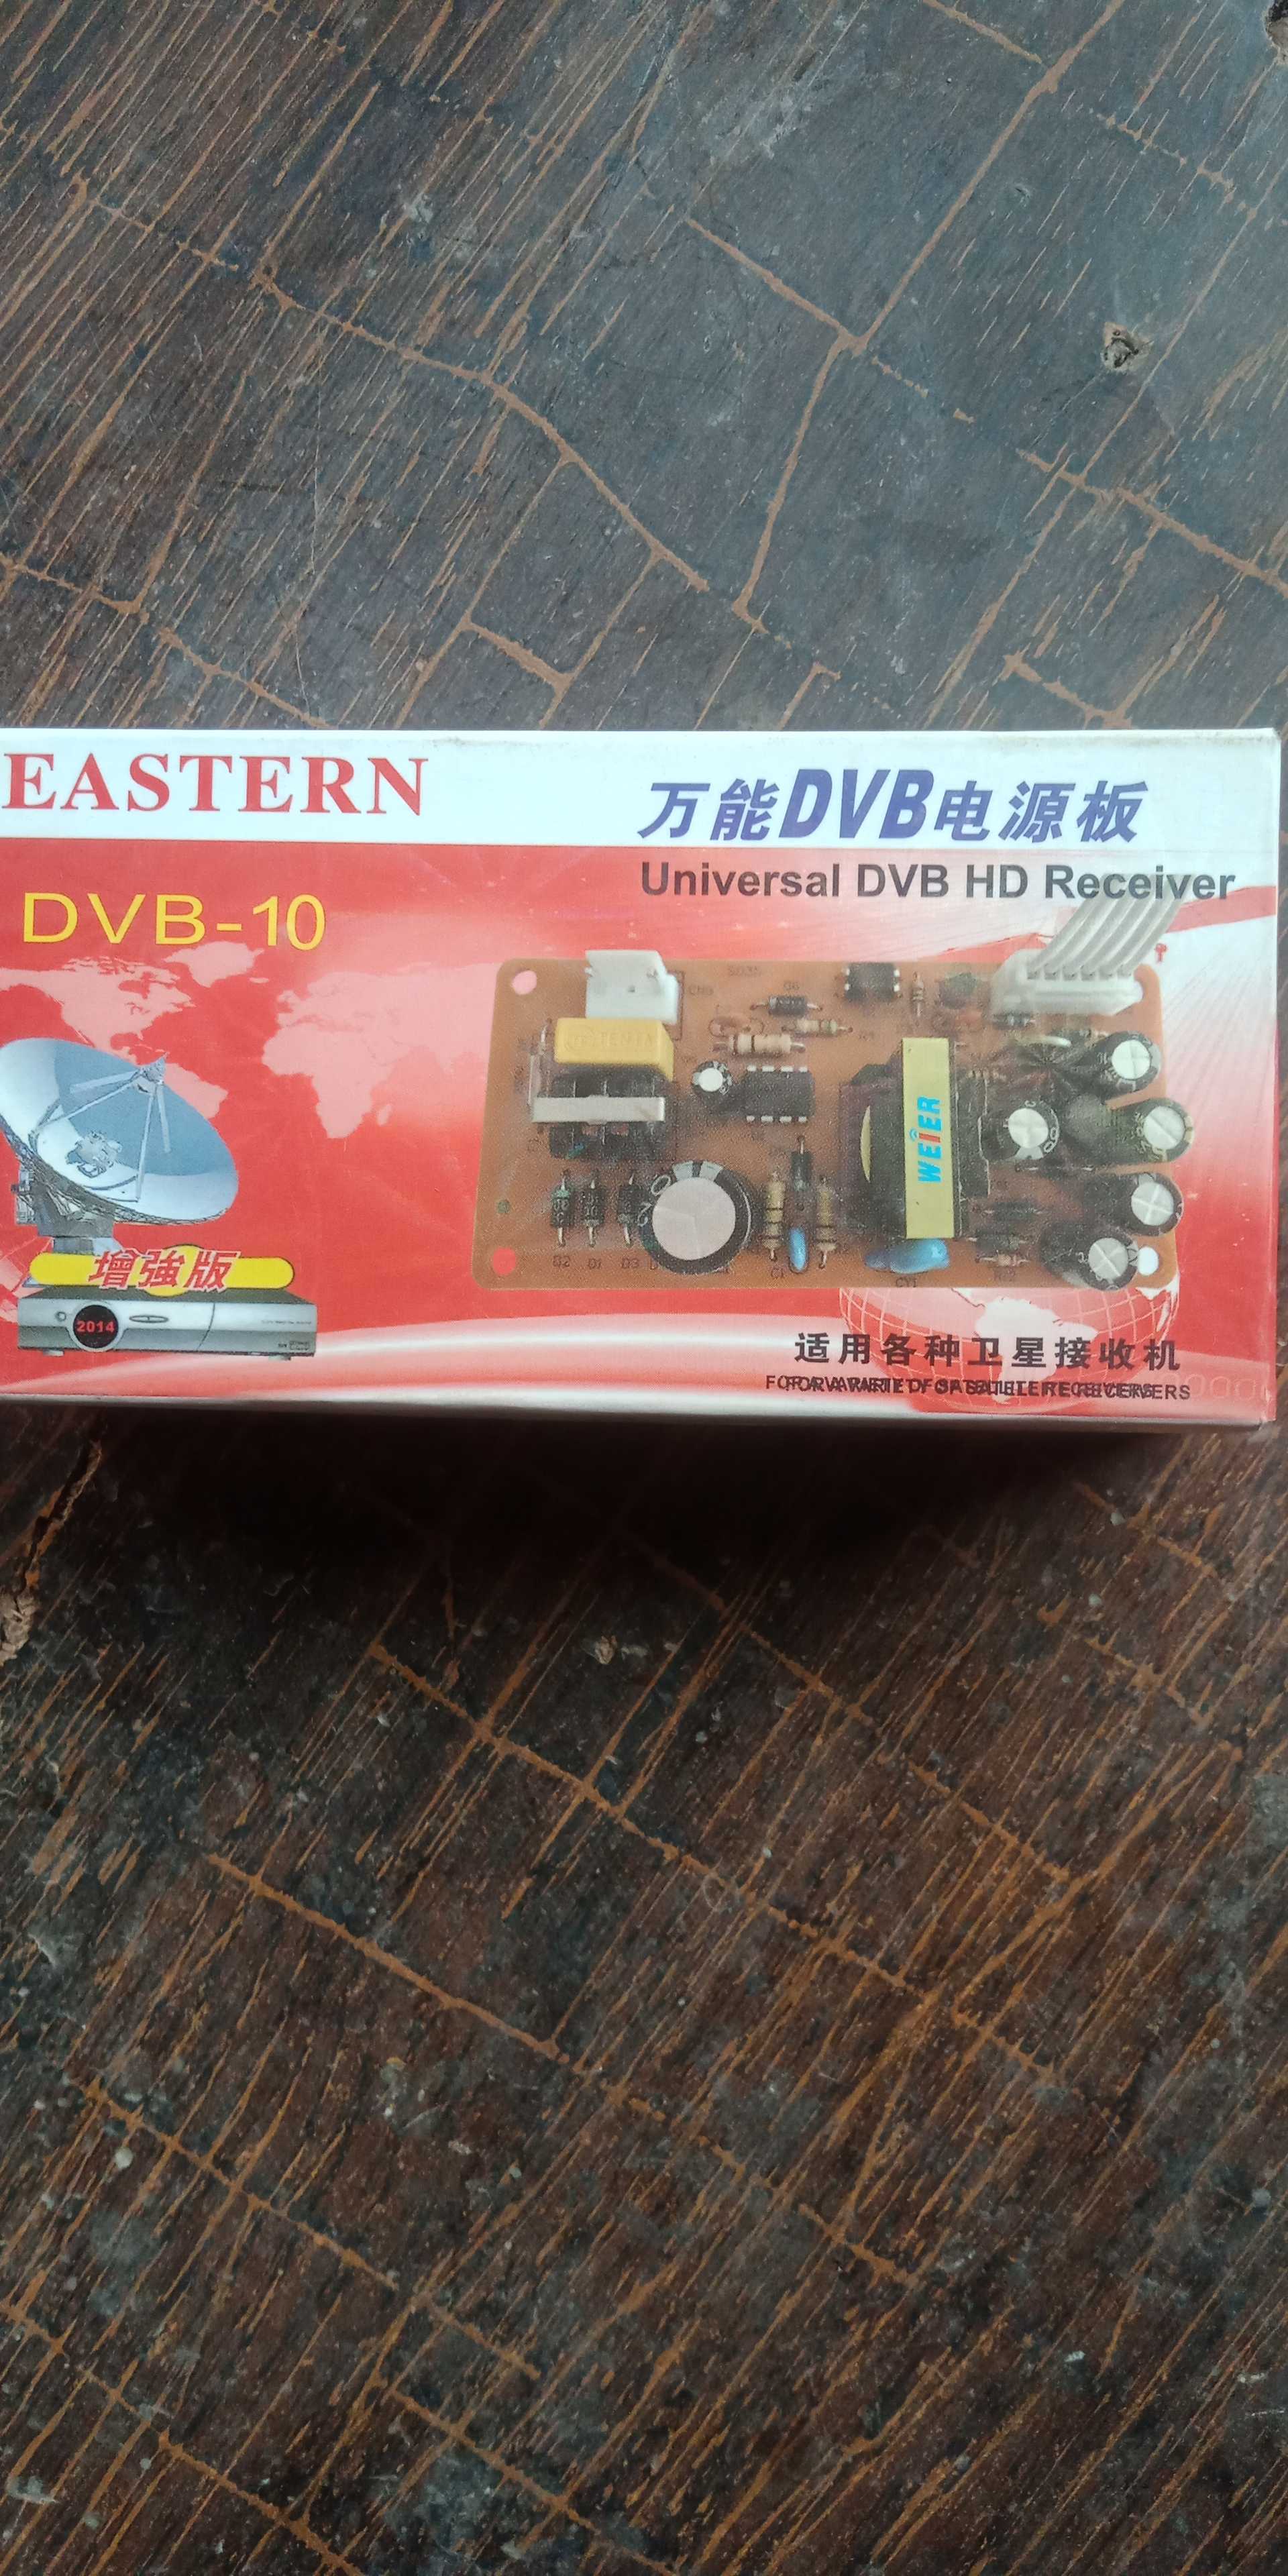 Universal DVB Power Board Eastern HD Receiver Power Suply DVB-10